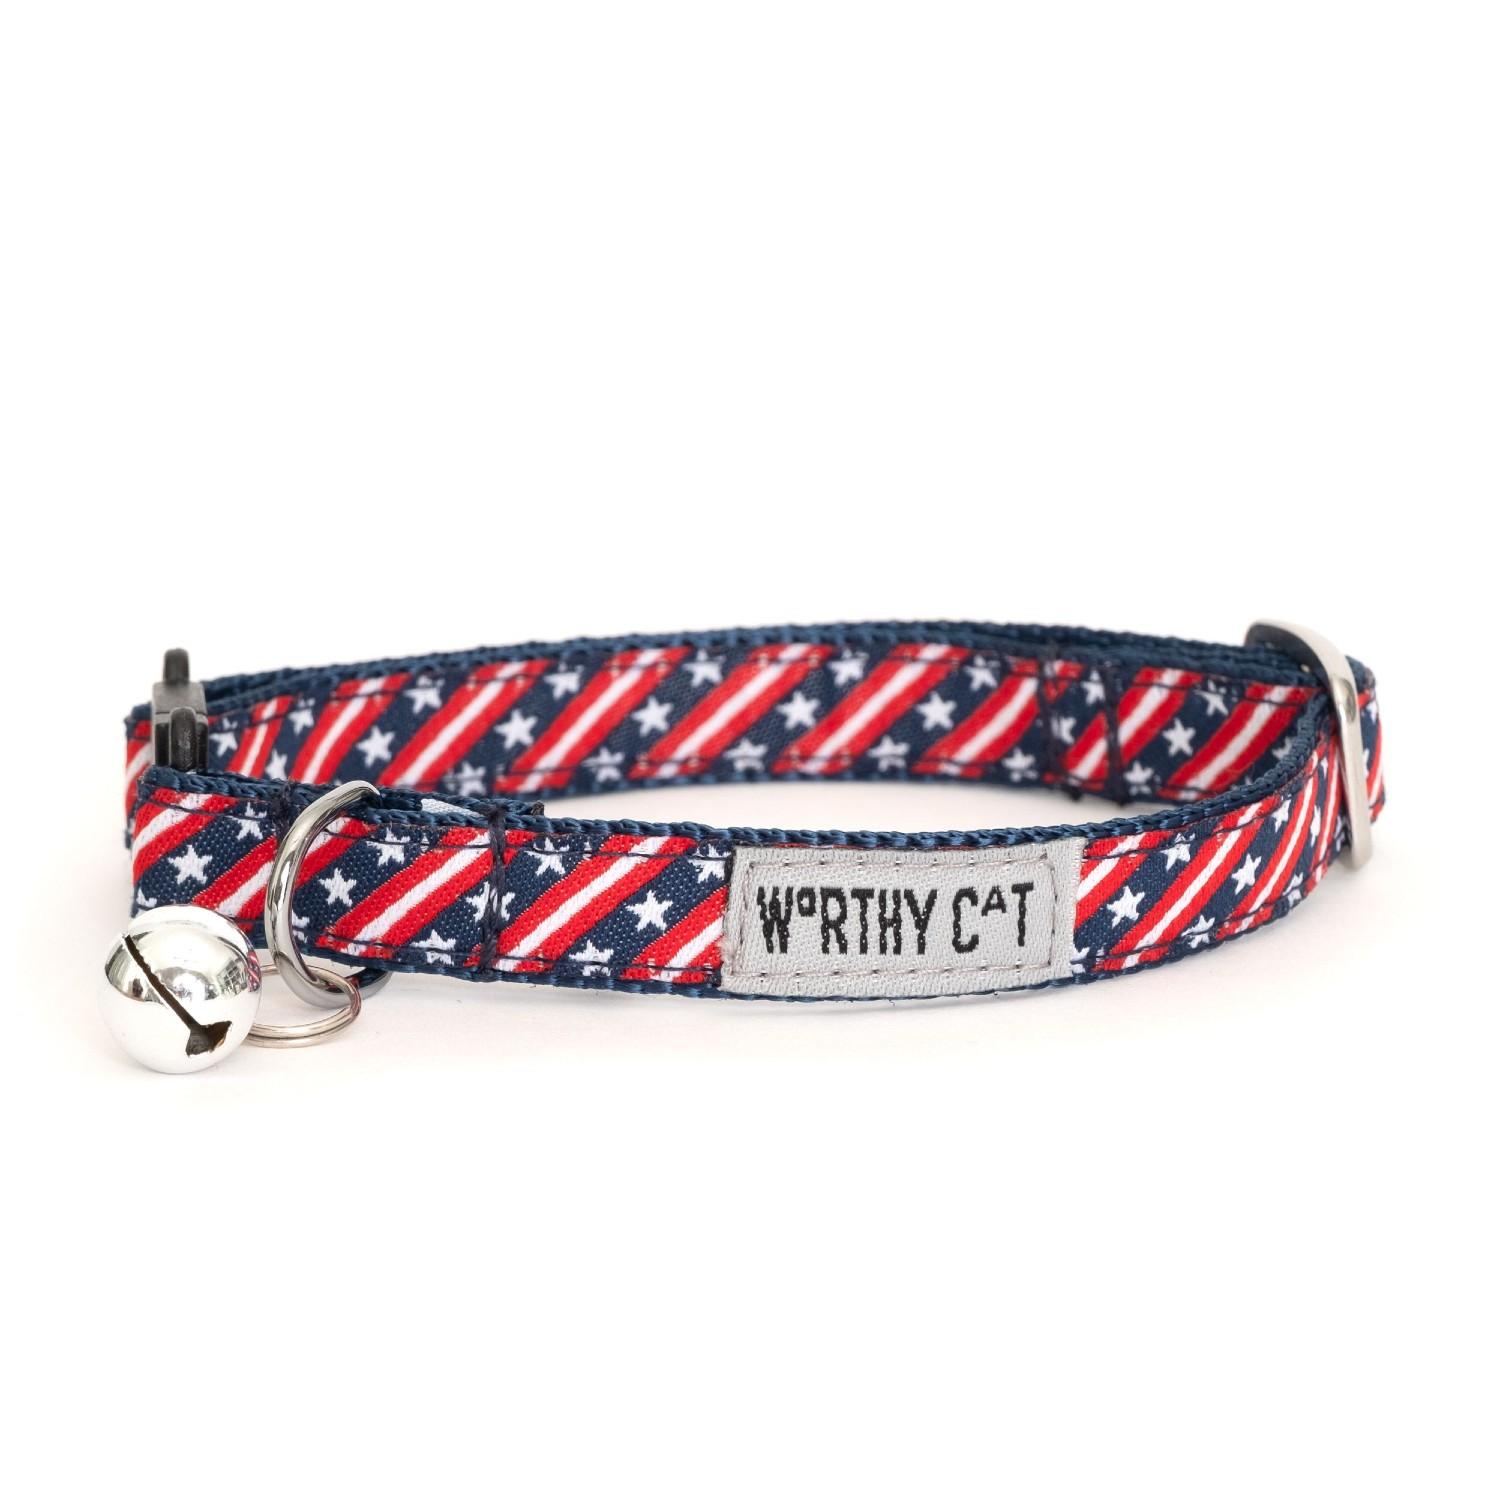 Worthy Dog Bias Cat Collar - Stars & Stripes